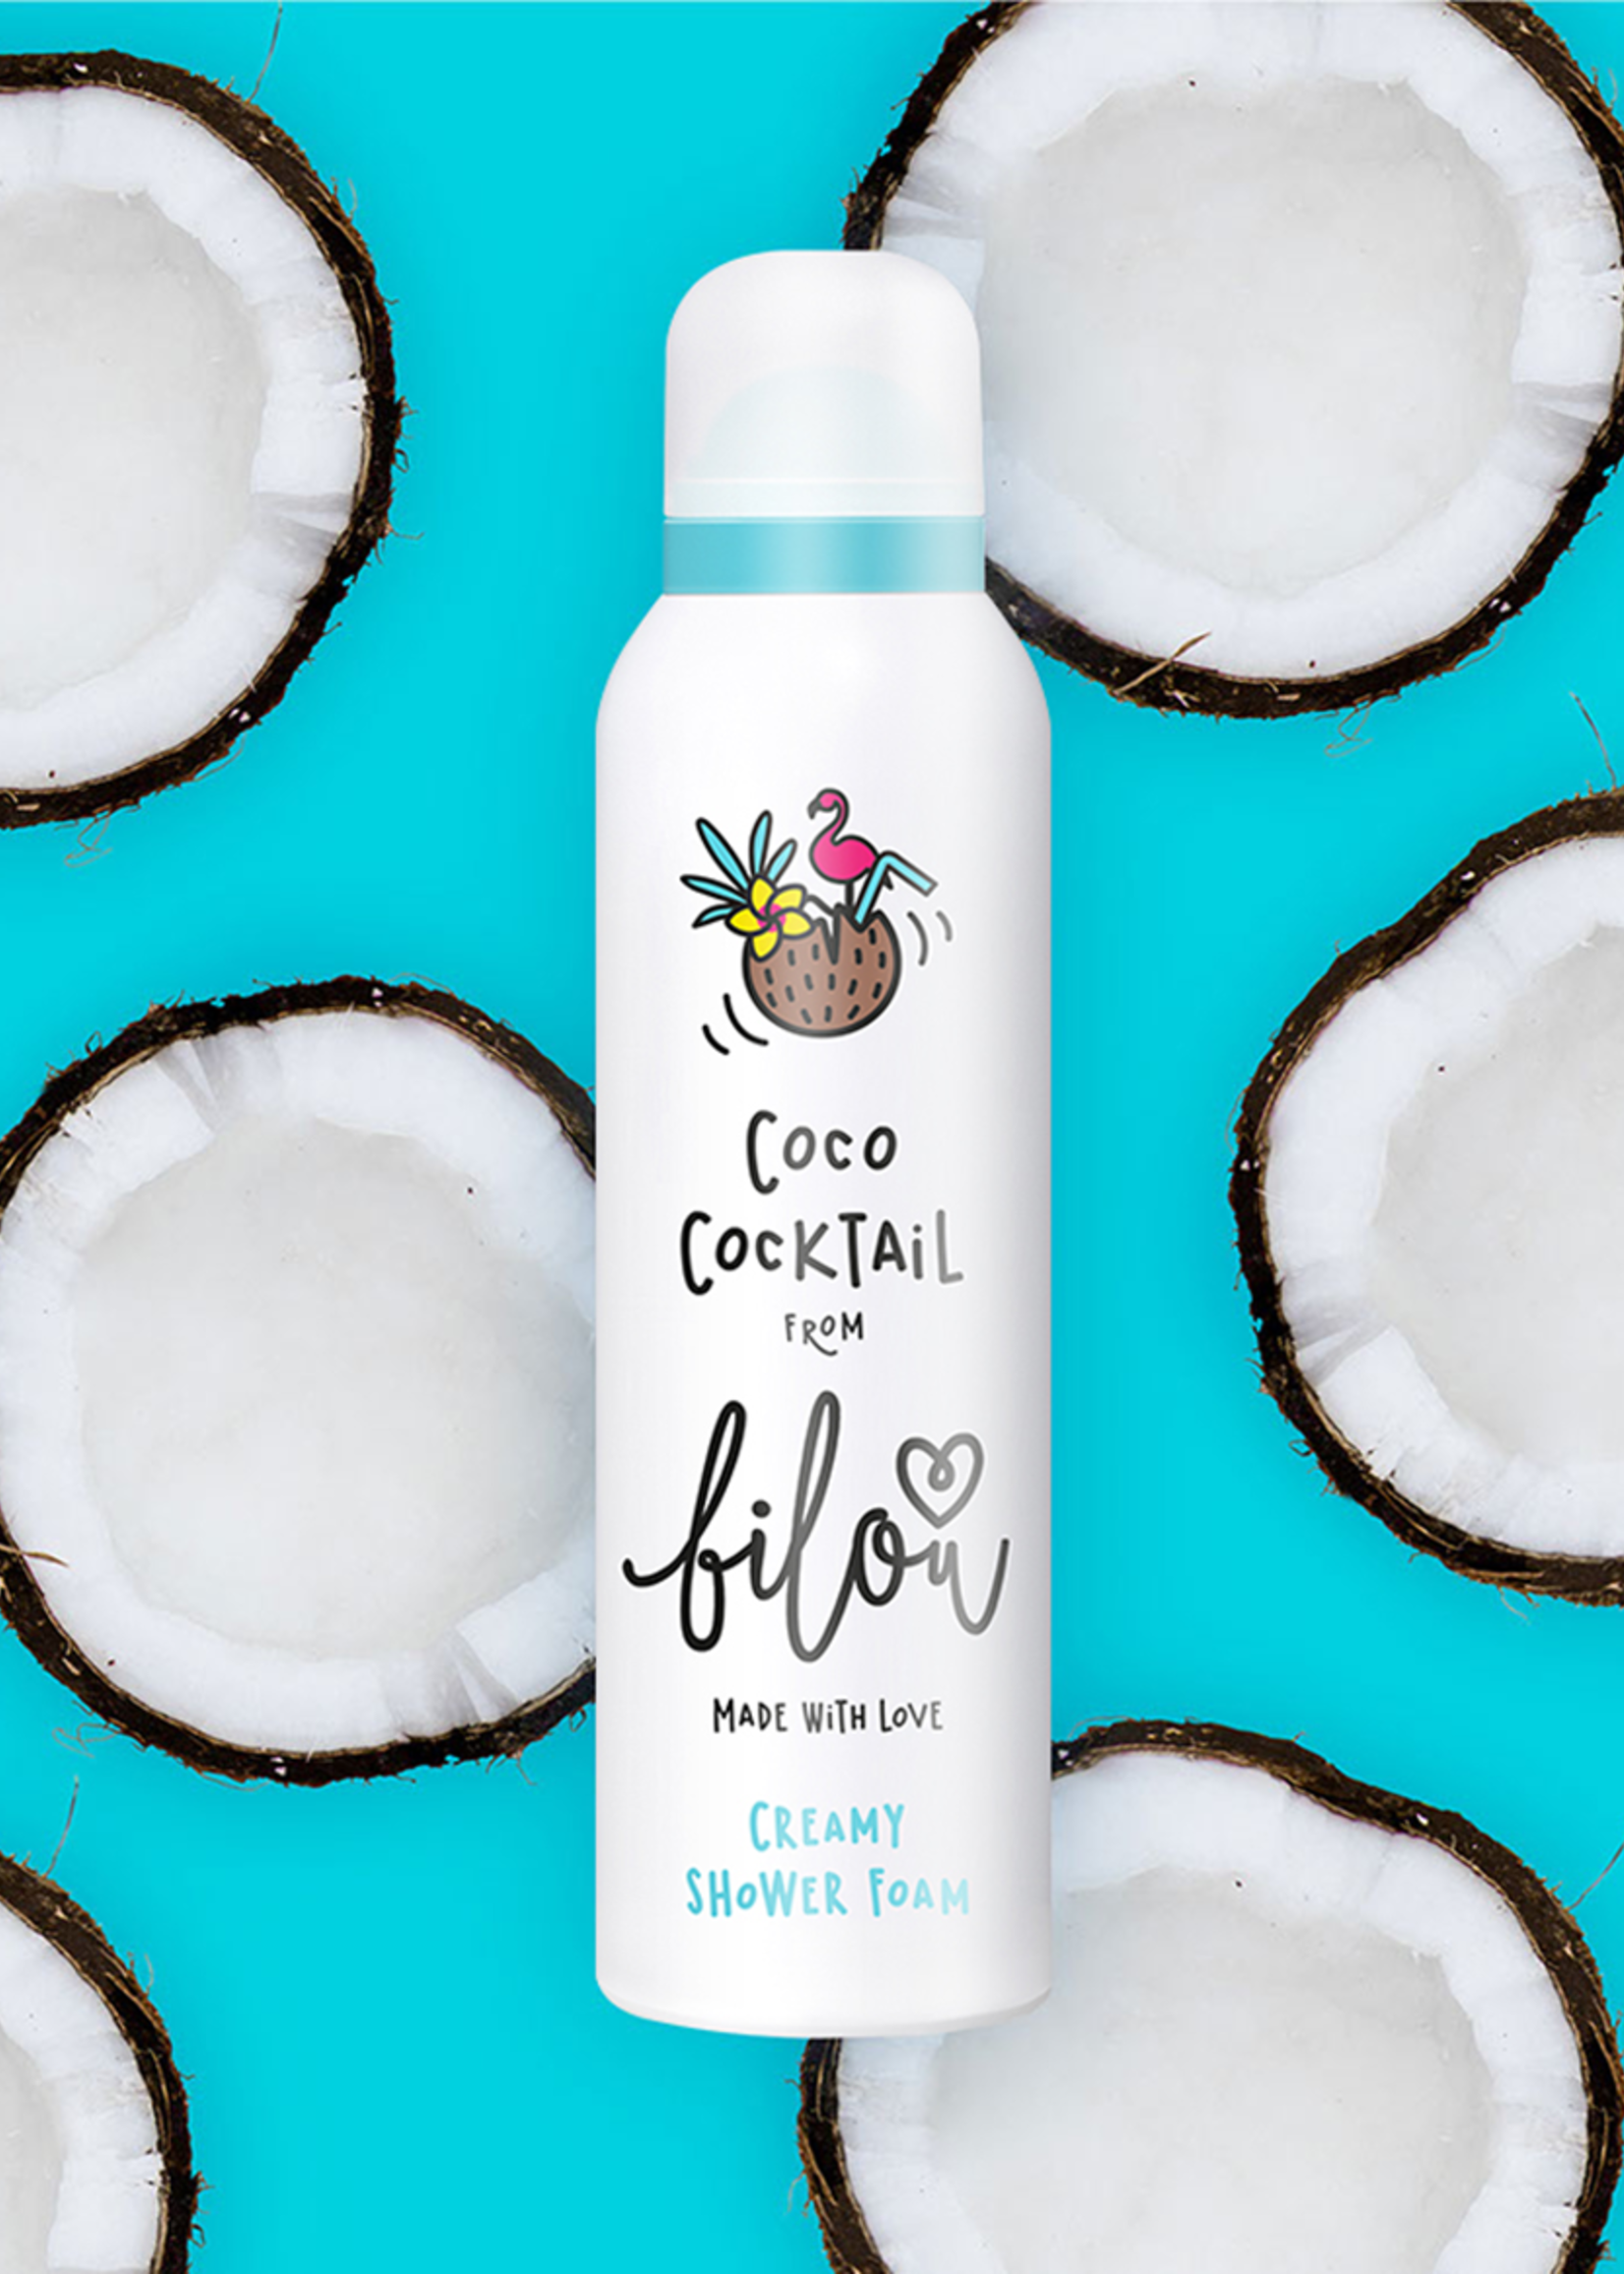 Bilou Showerfoam Coco Cocktail